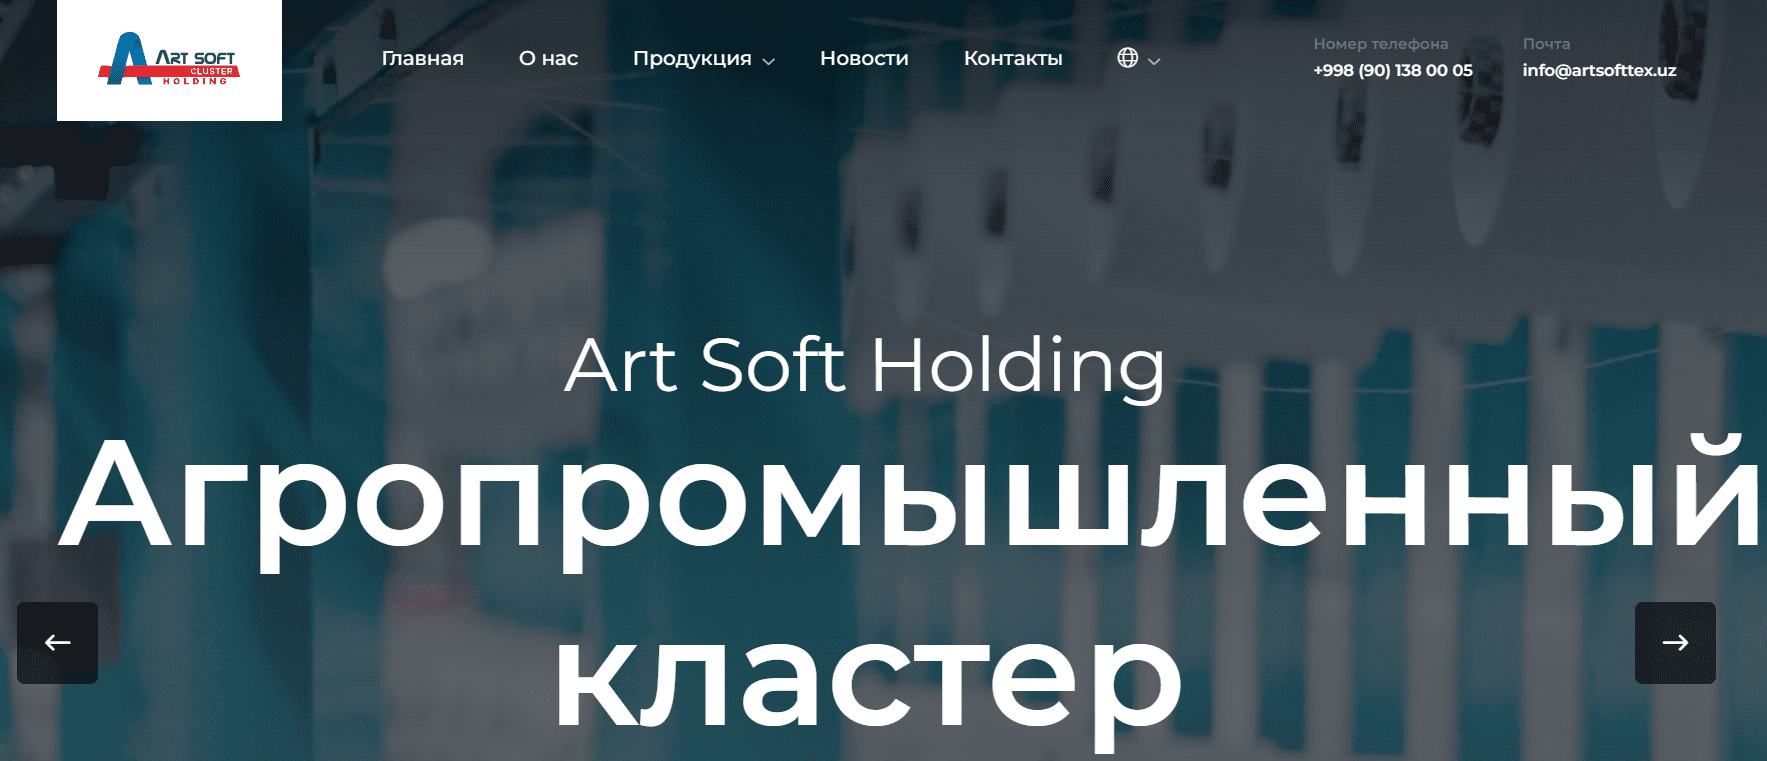 ART SOFT HOLDING (artsofttex.uz) - официальный сайт